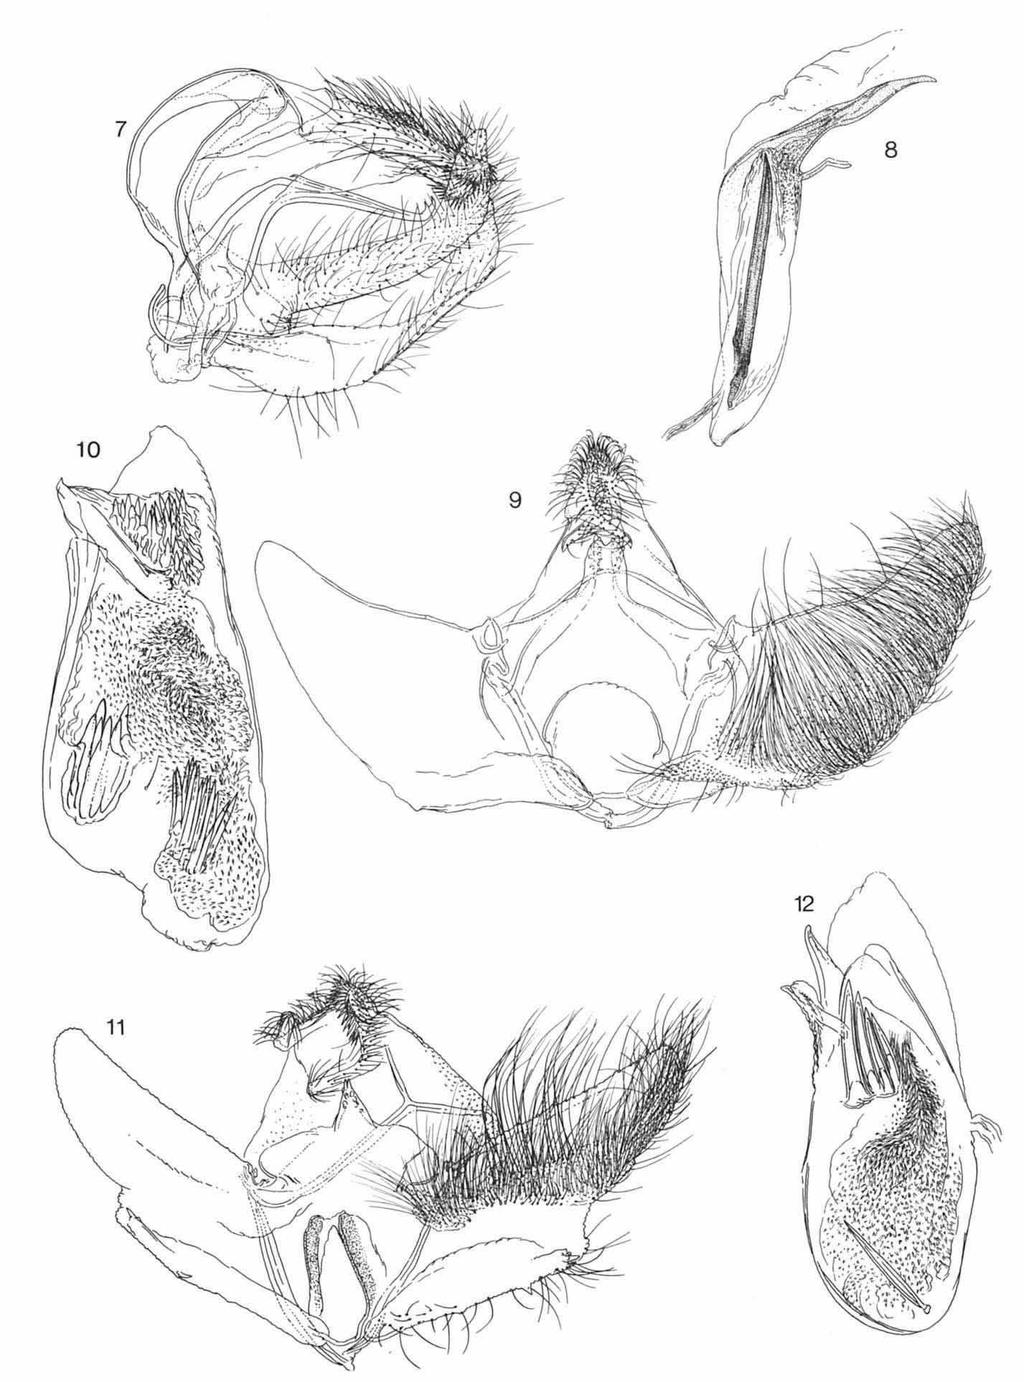 272 ZOOLOGISCHE MEDEDELINGEN 58 (1984) Figs. 7 12. Genitalia of S. Asiatic Cochylinae, males. 7, Phalonidia pista spec, nov.